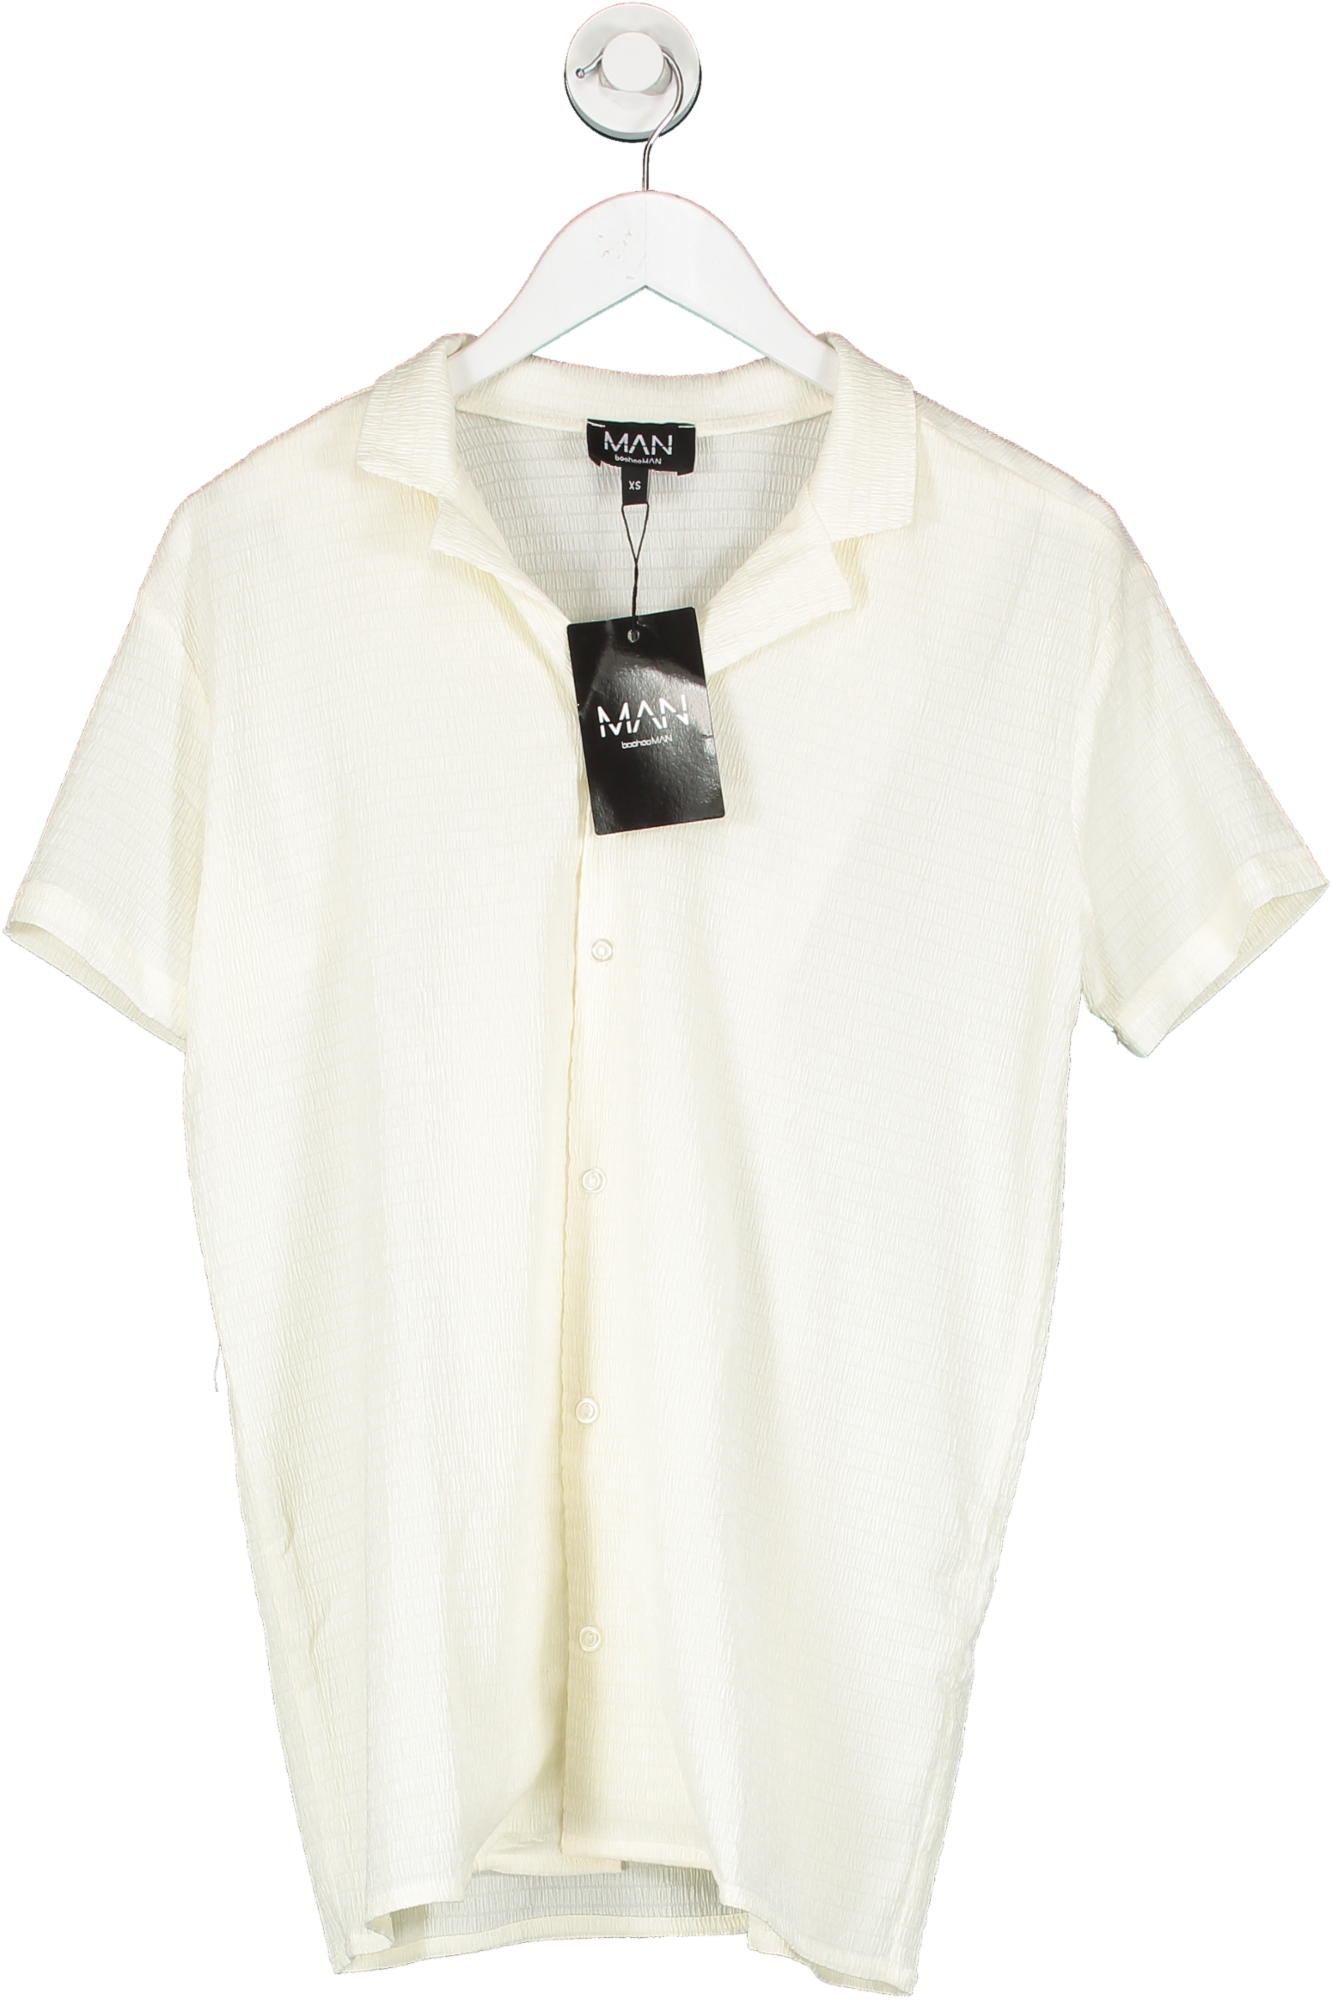 boohooMan White Textured Crinkle Shirt UK XS